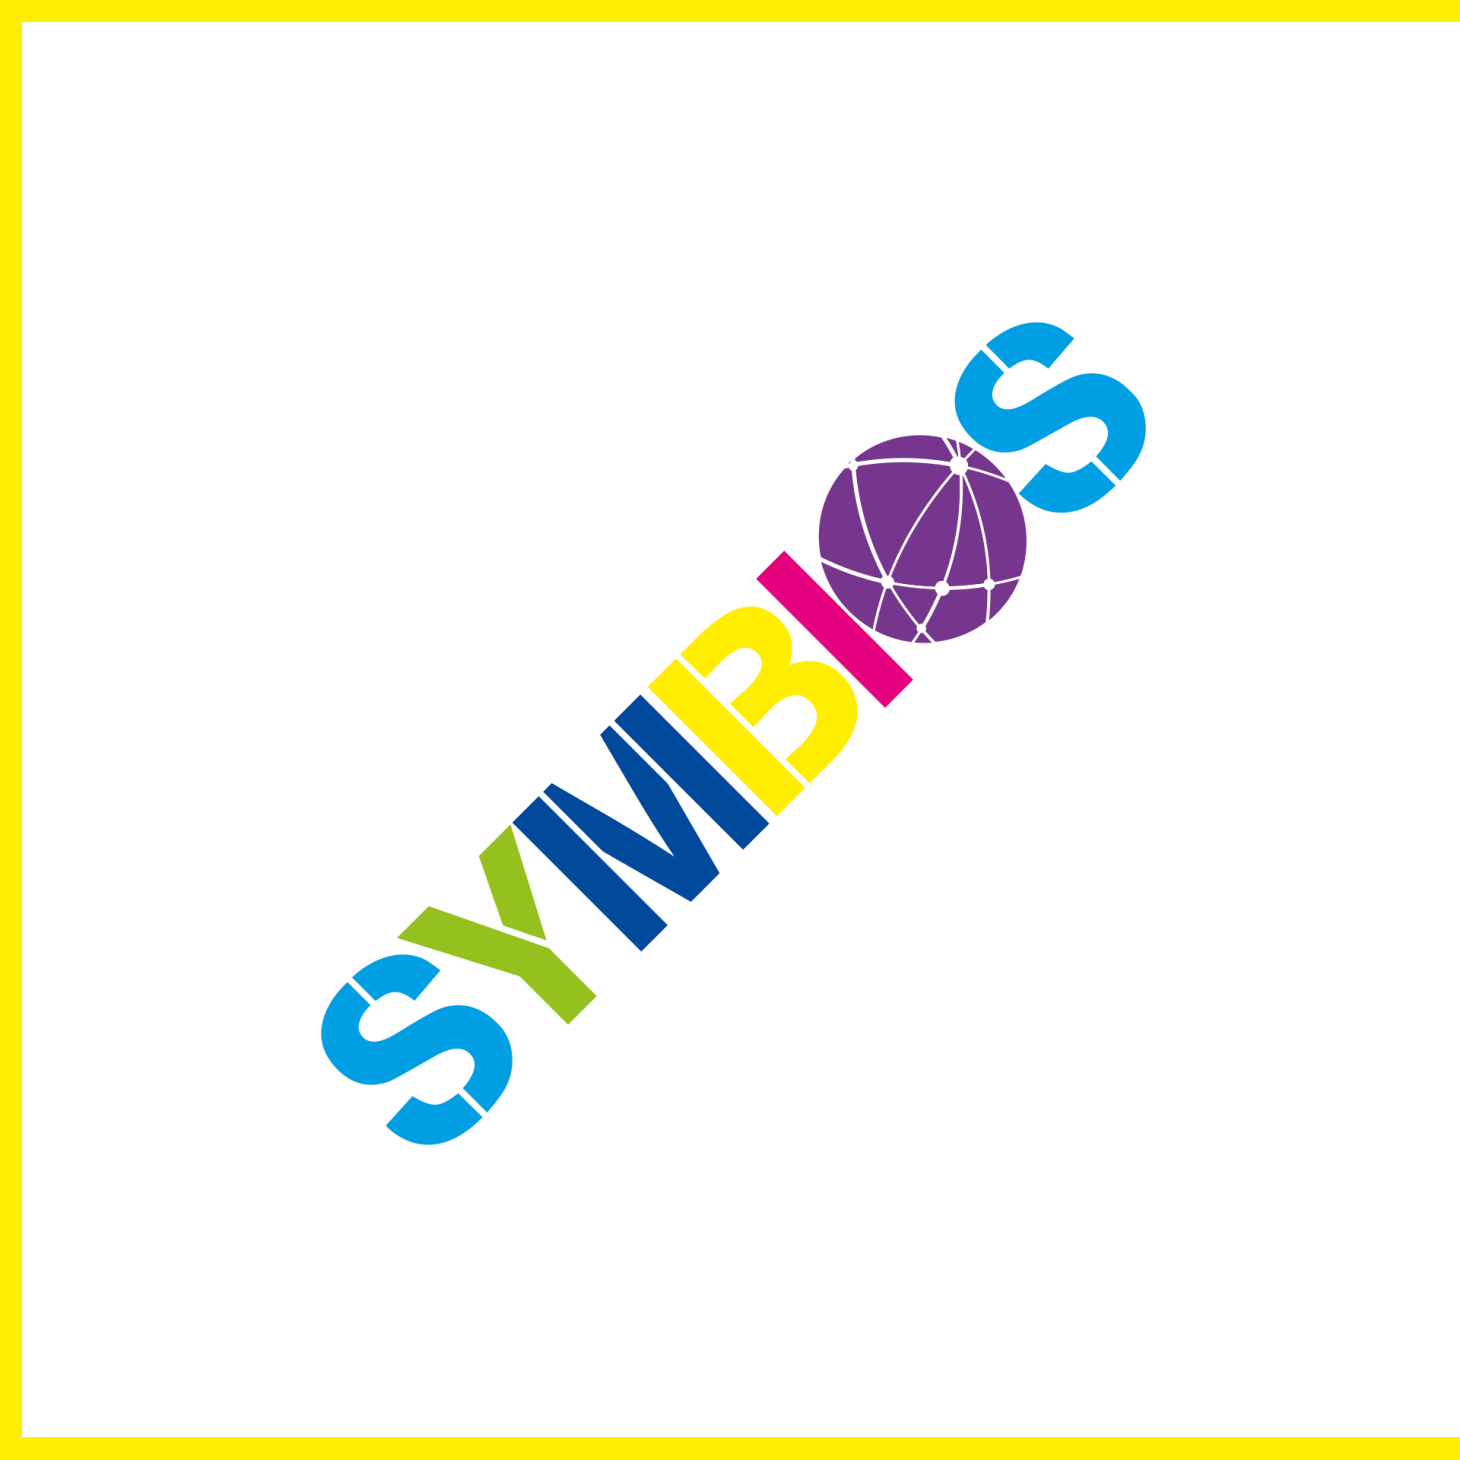 Symbios